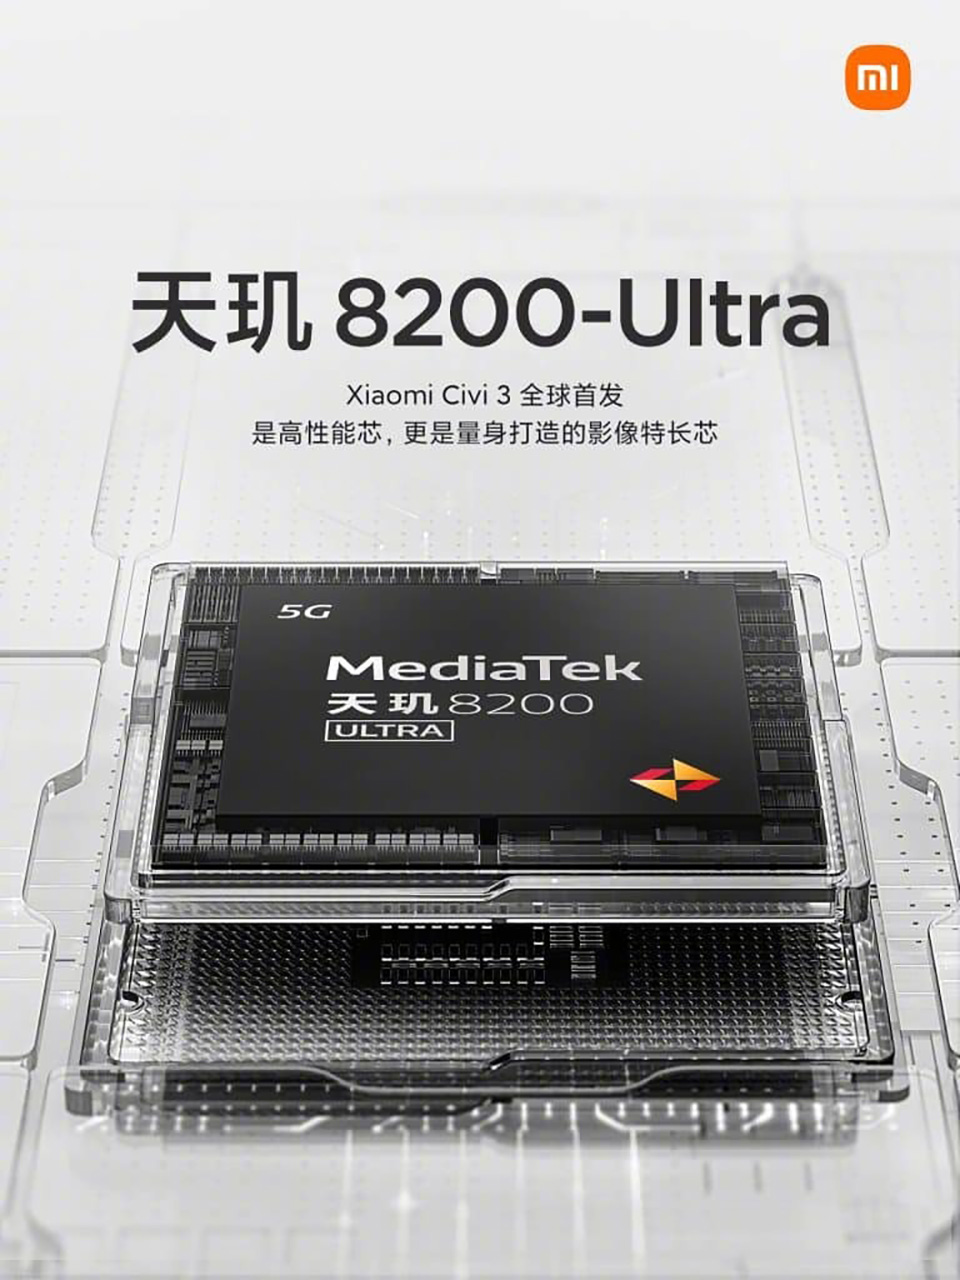 Xiaomi Civi 3 là thiết bị đầu tiên trang bị MediaTek Dimensity 8200 Ultra